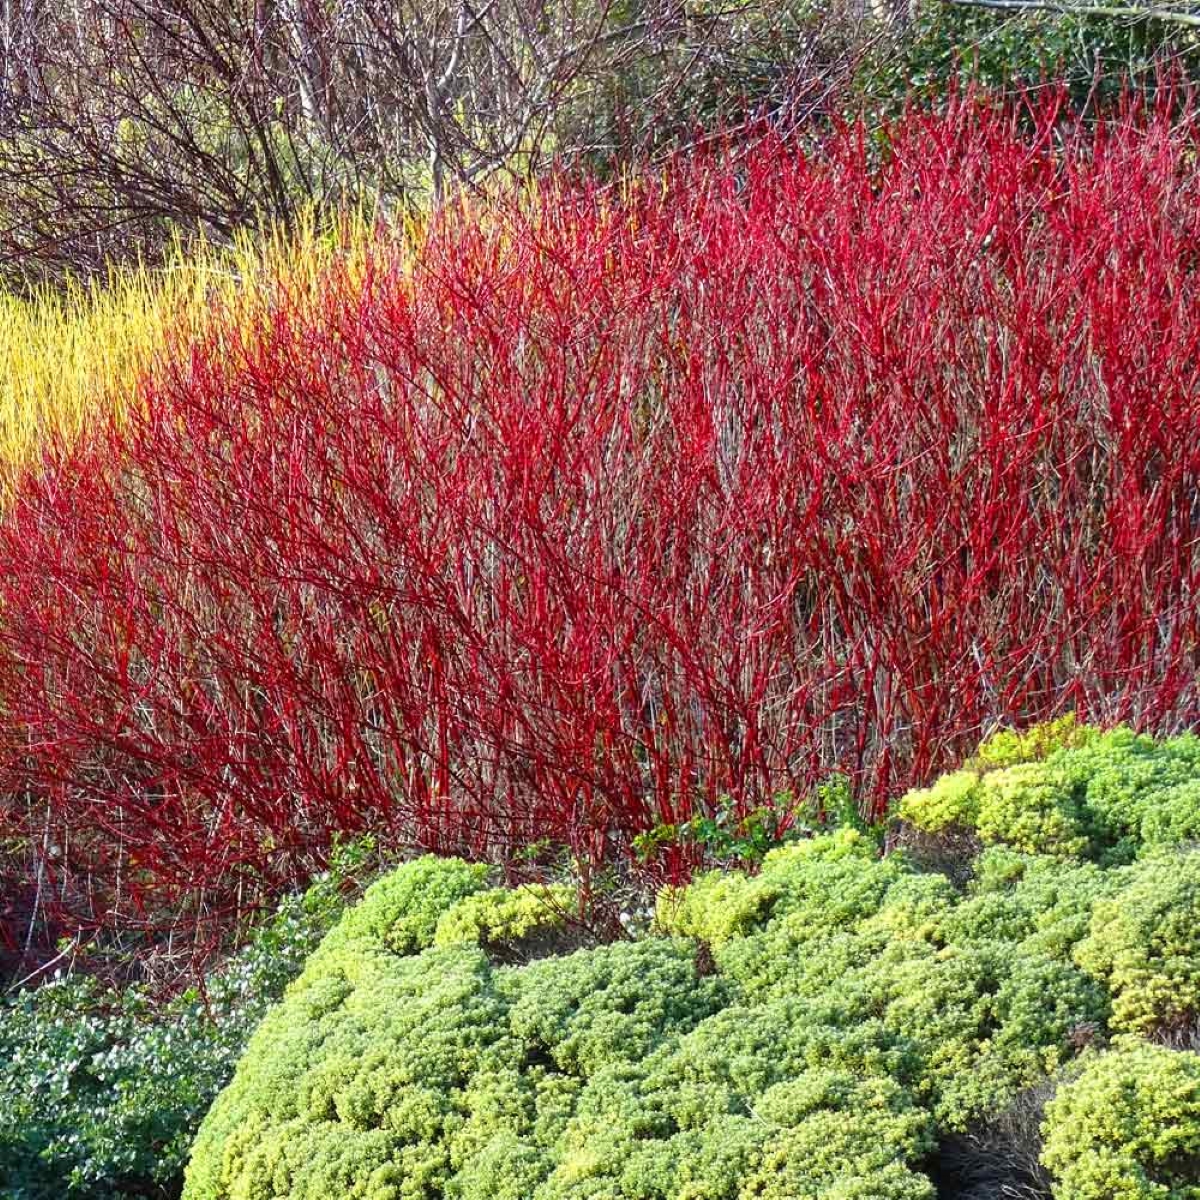 Red twig dogwood bushes